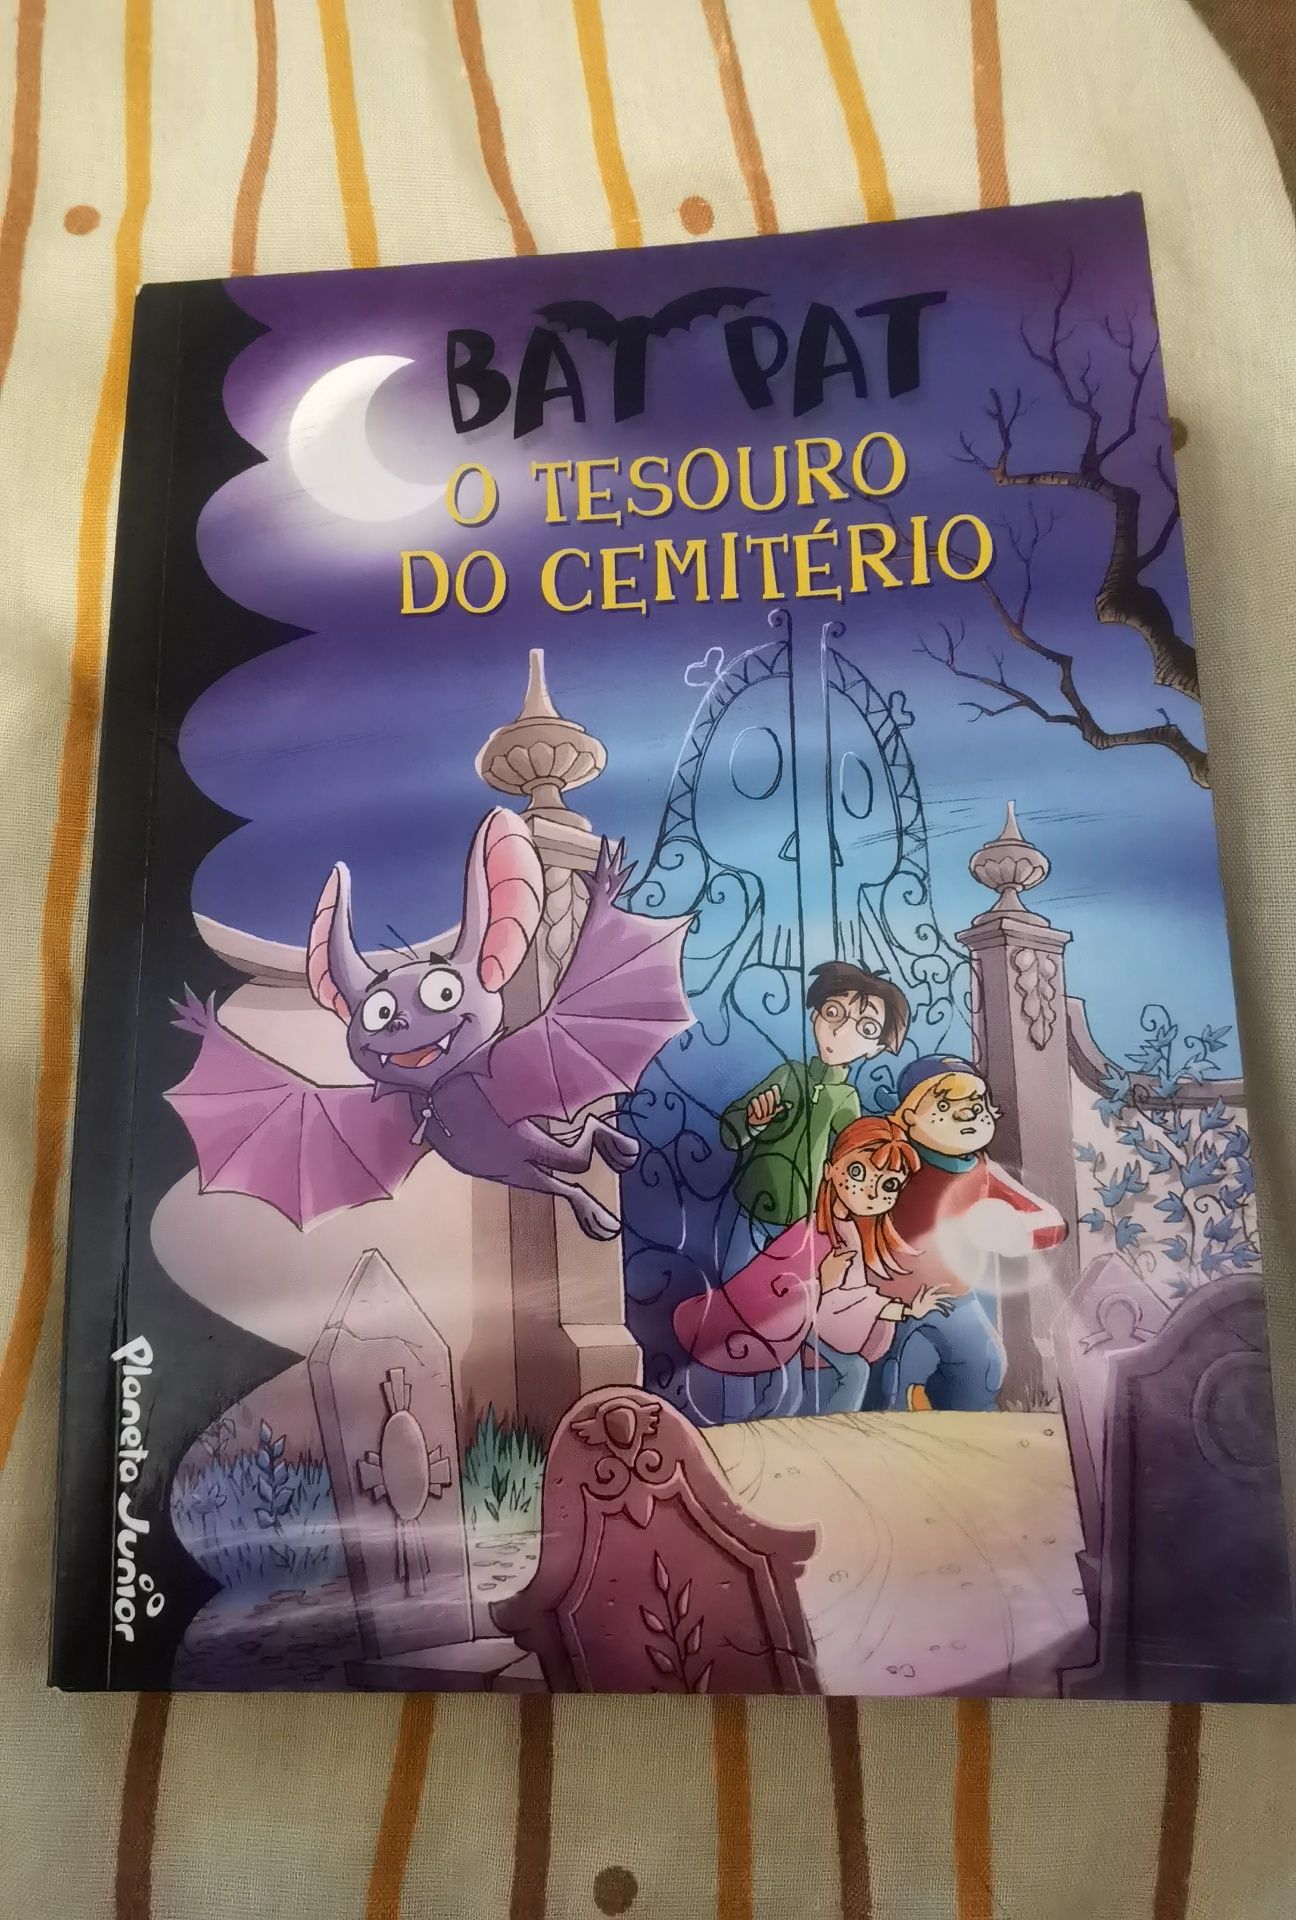 Livro "Bat Pat - O tesouro do cemitério" de Roberto Pavanello Livro 1